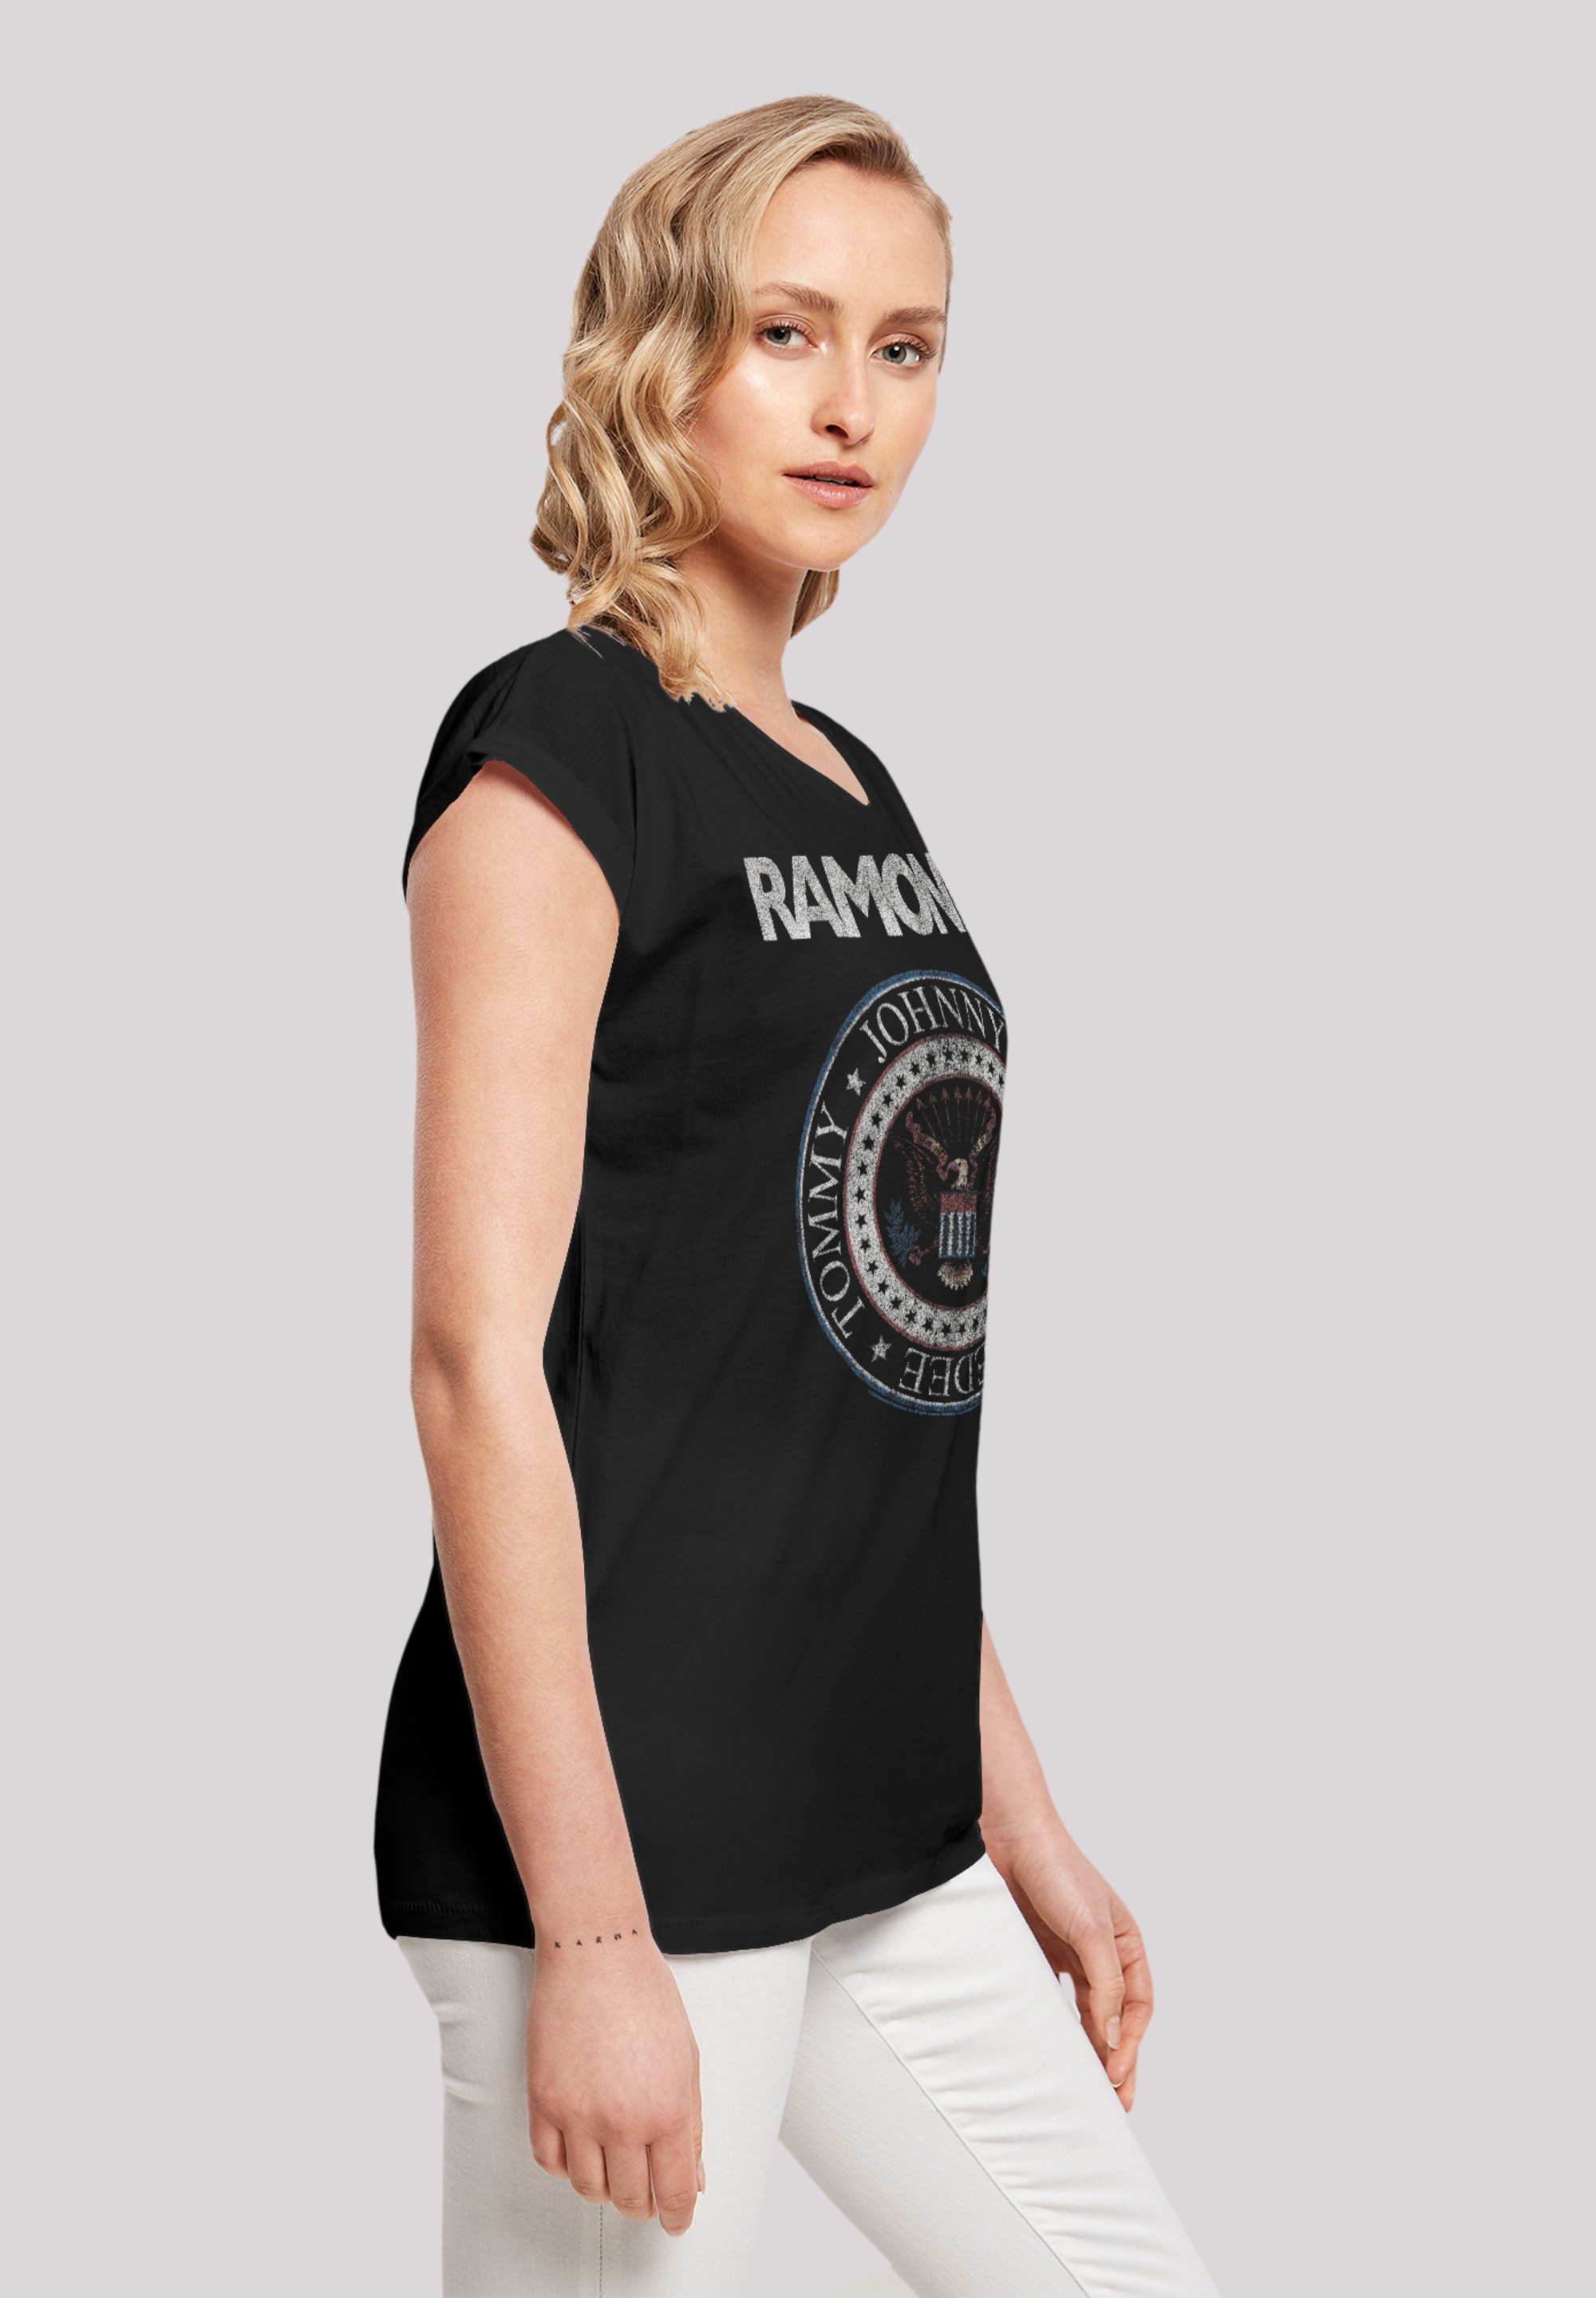 Rock | T-Shirt BAUR Musik bestellen Premium Red Band, F4NT4STIC »Ramones Qualität, Band White Seal«, And Rock-Musik